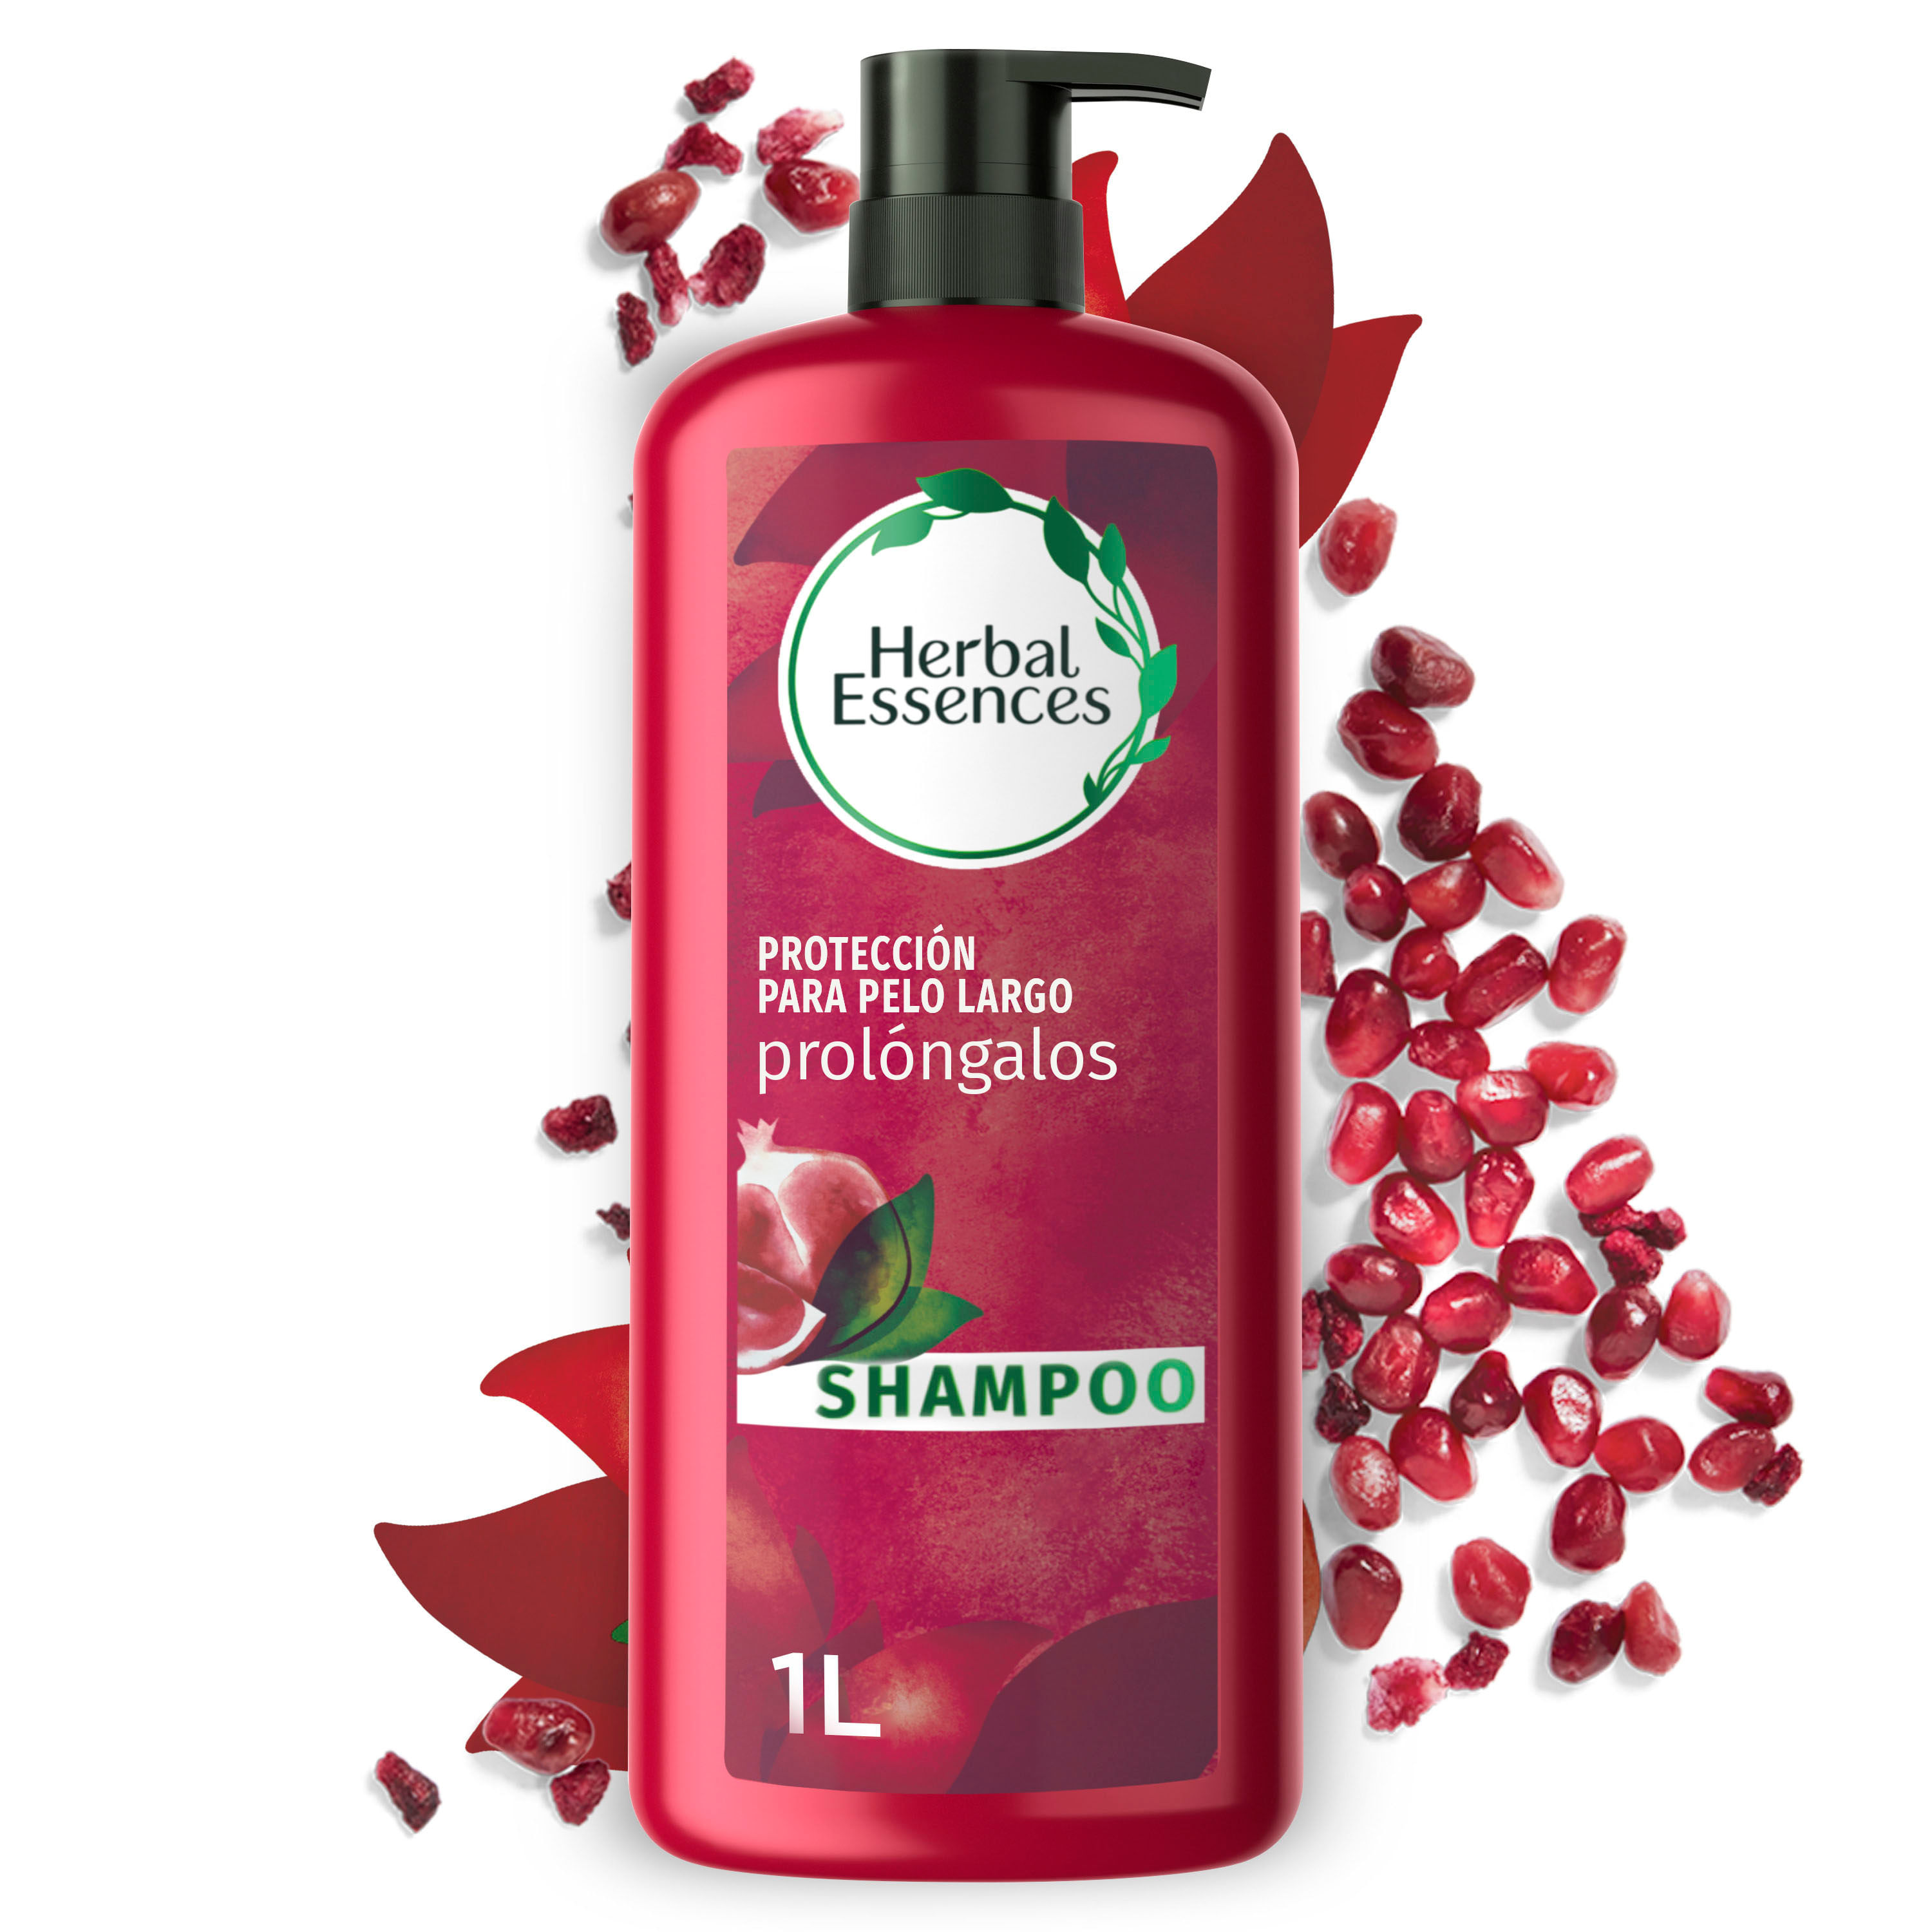 Shampoo-Herbal-Essences-Prol-ngalo-1000-ml-1-9828